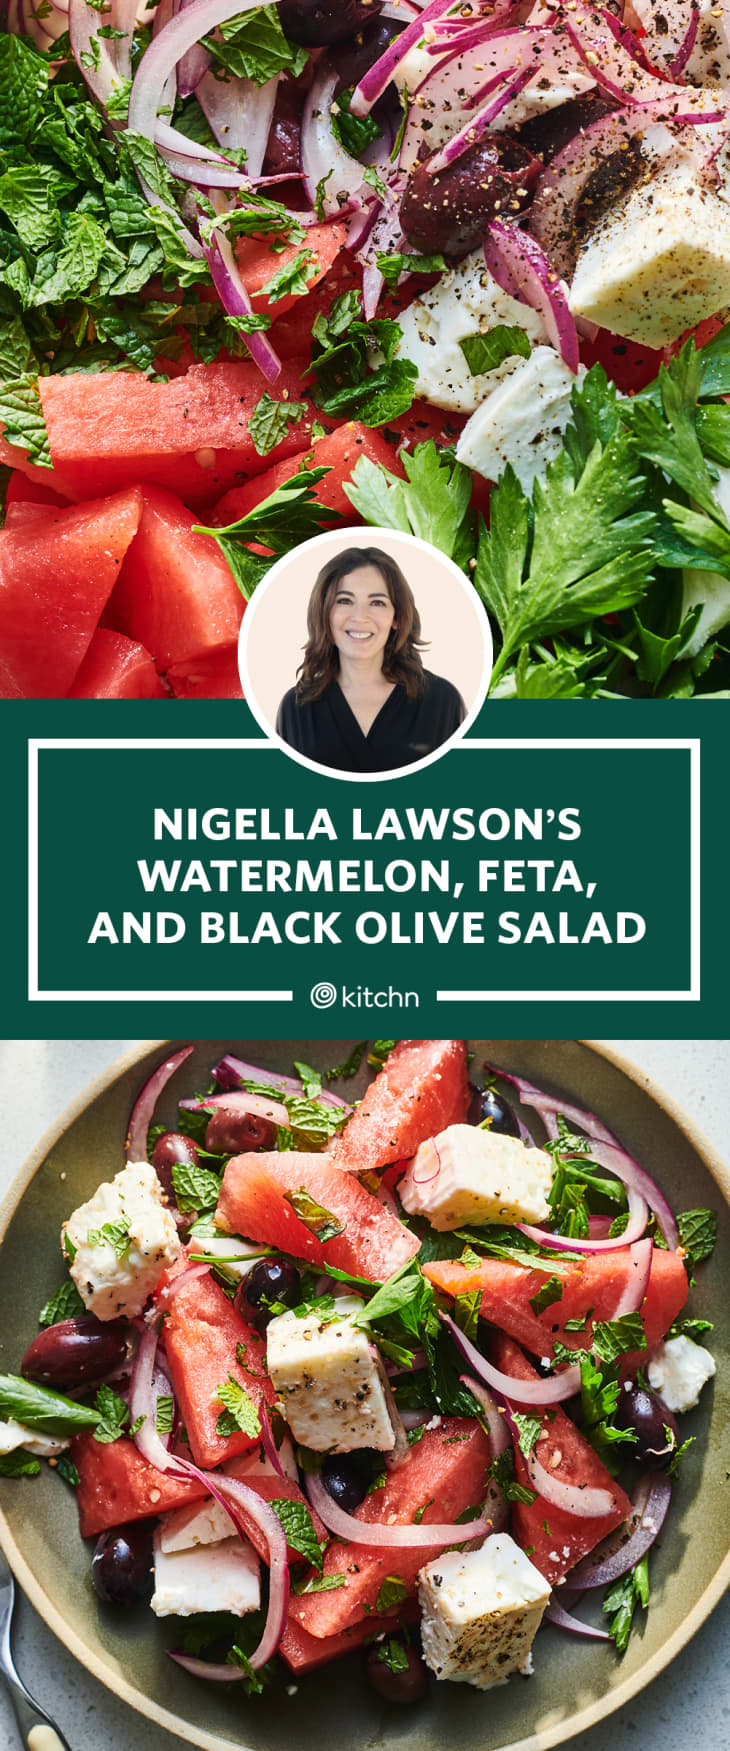 Photos of Nigella Lawson and her watermelon salad recipe